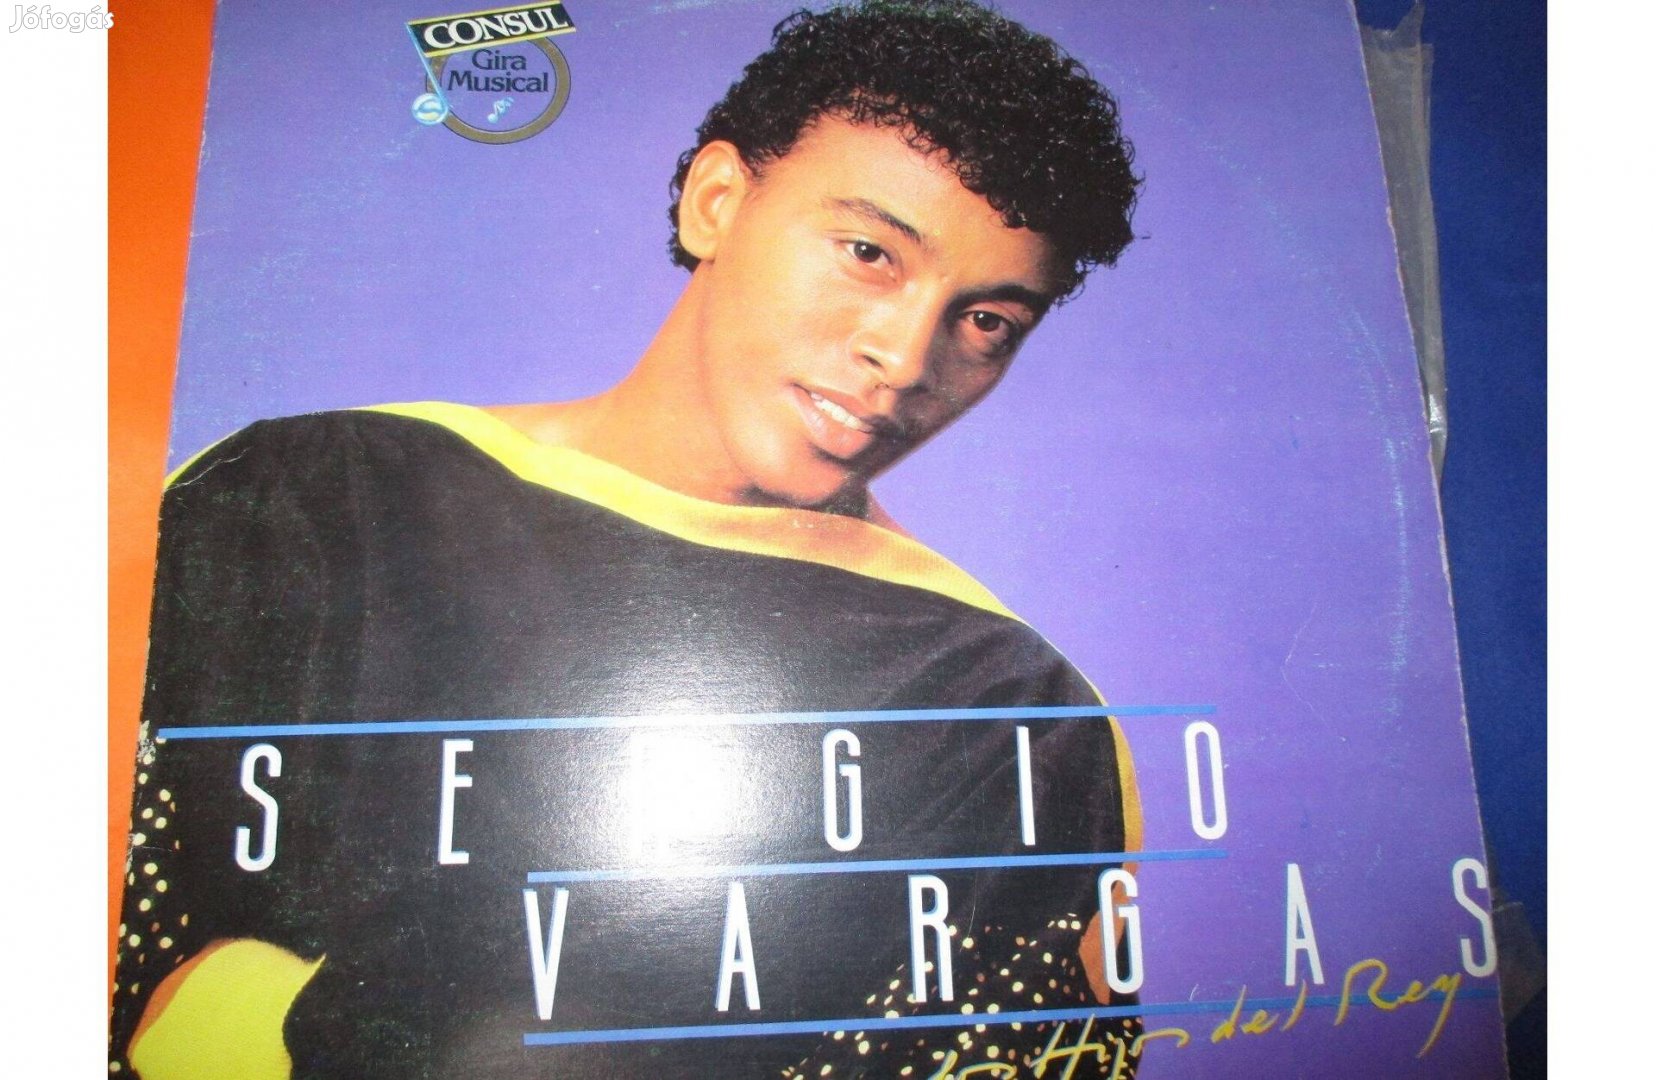 Sergio Vargas bakelit hanglemez eladó